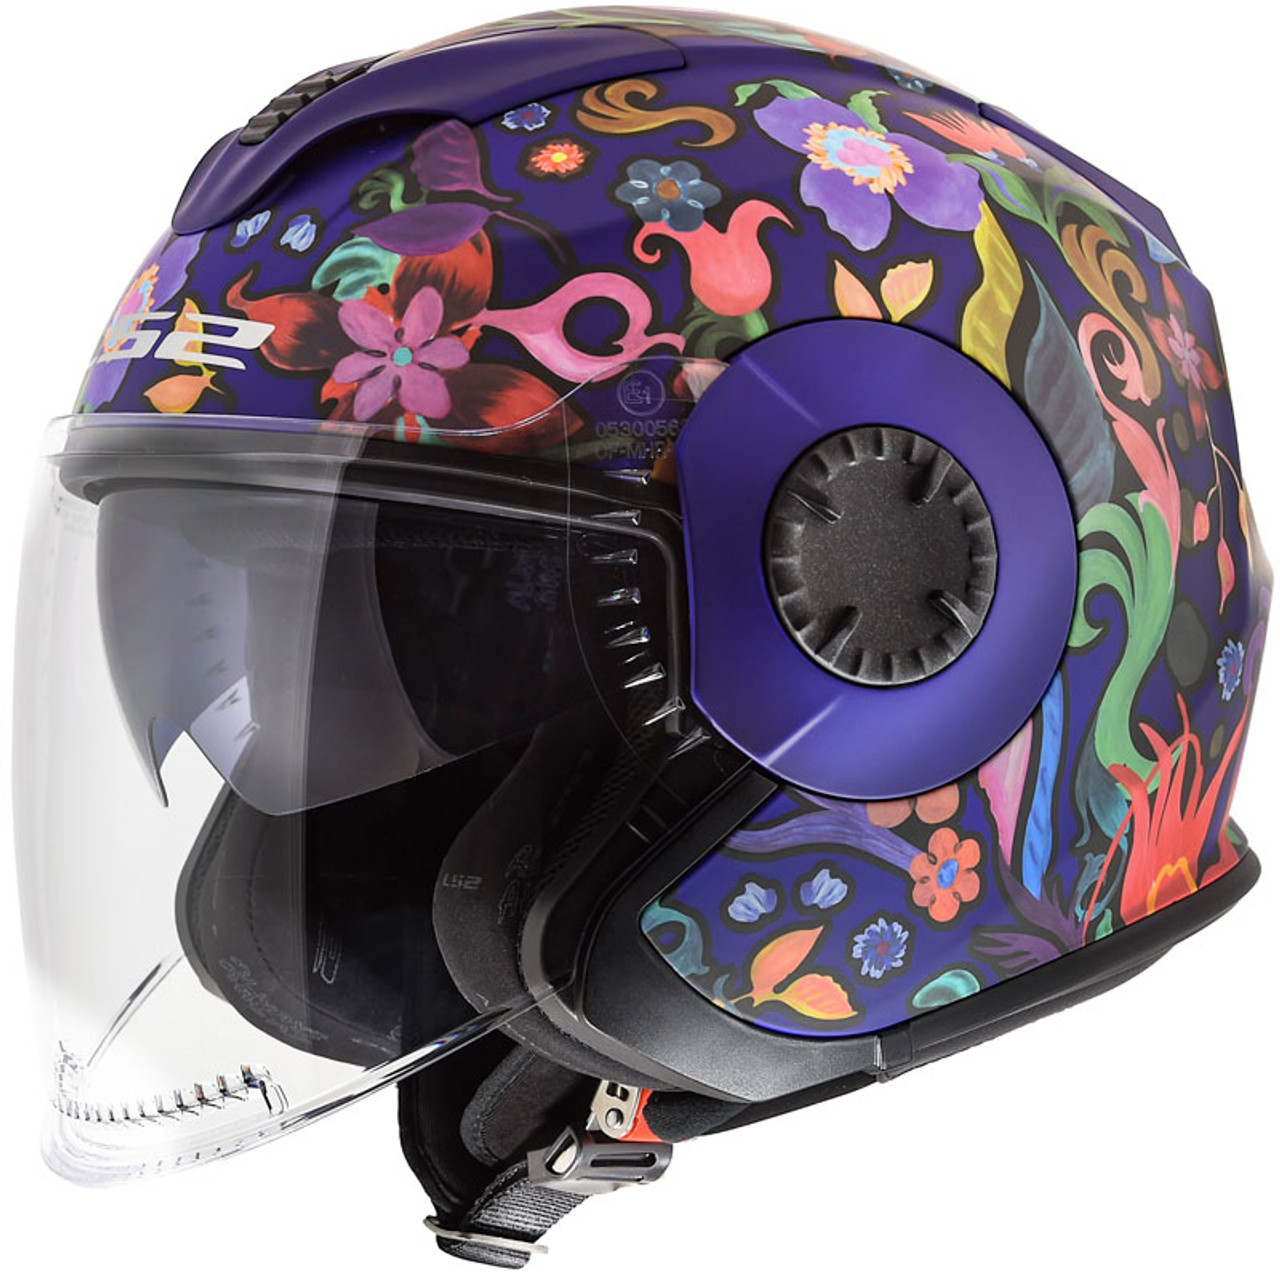 Ls2 エルエスツー Verso Flora Brazil Helmet ジェットヘルメット オープンフェイスヘルメット ストリート オンロード バイク ライダー ツーリングにも かっこいい 大きいサイズあり おすすめ Amaclub 即納 最大半額